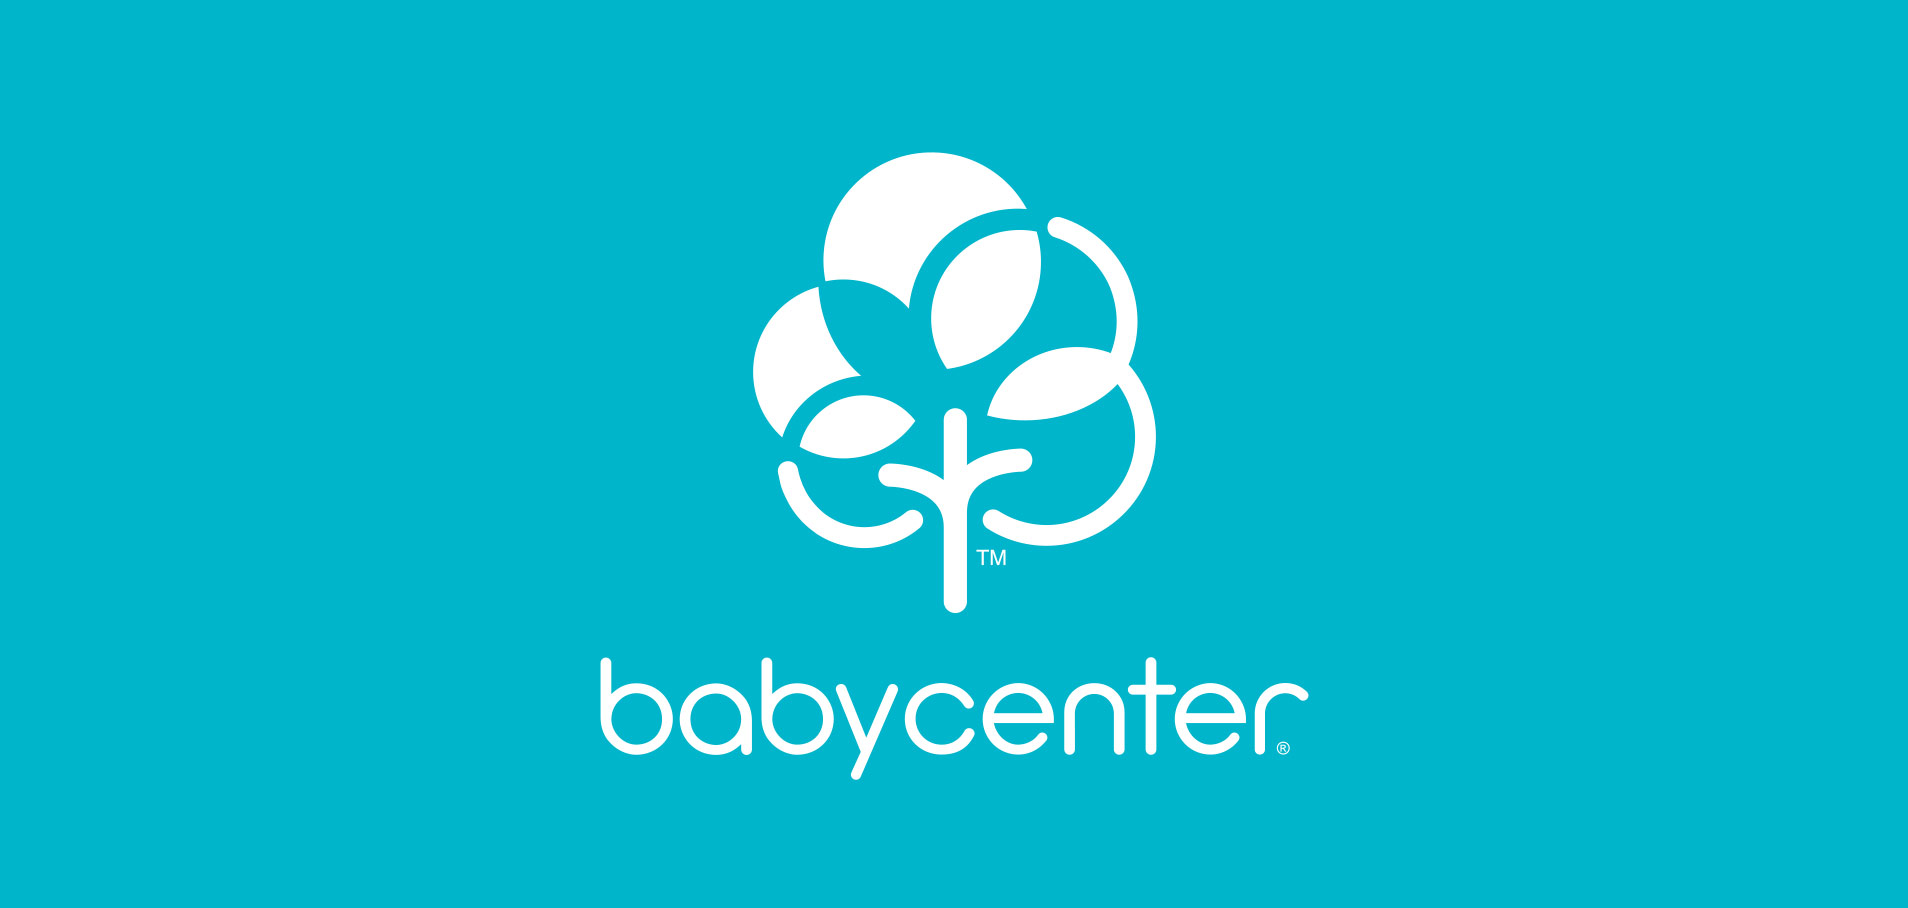 Baby center logo image